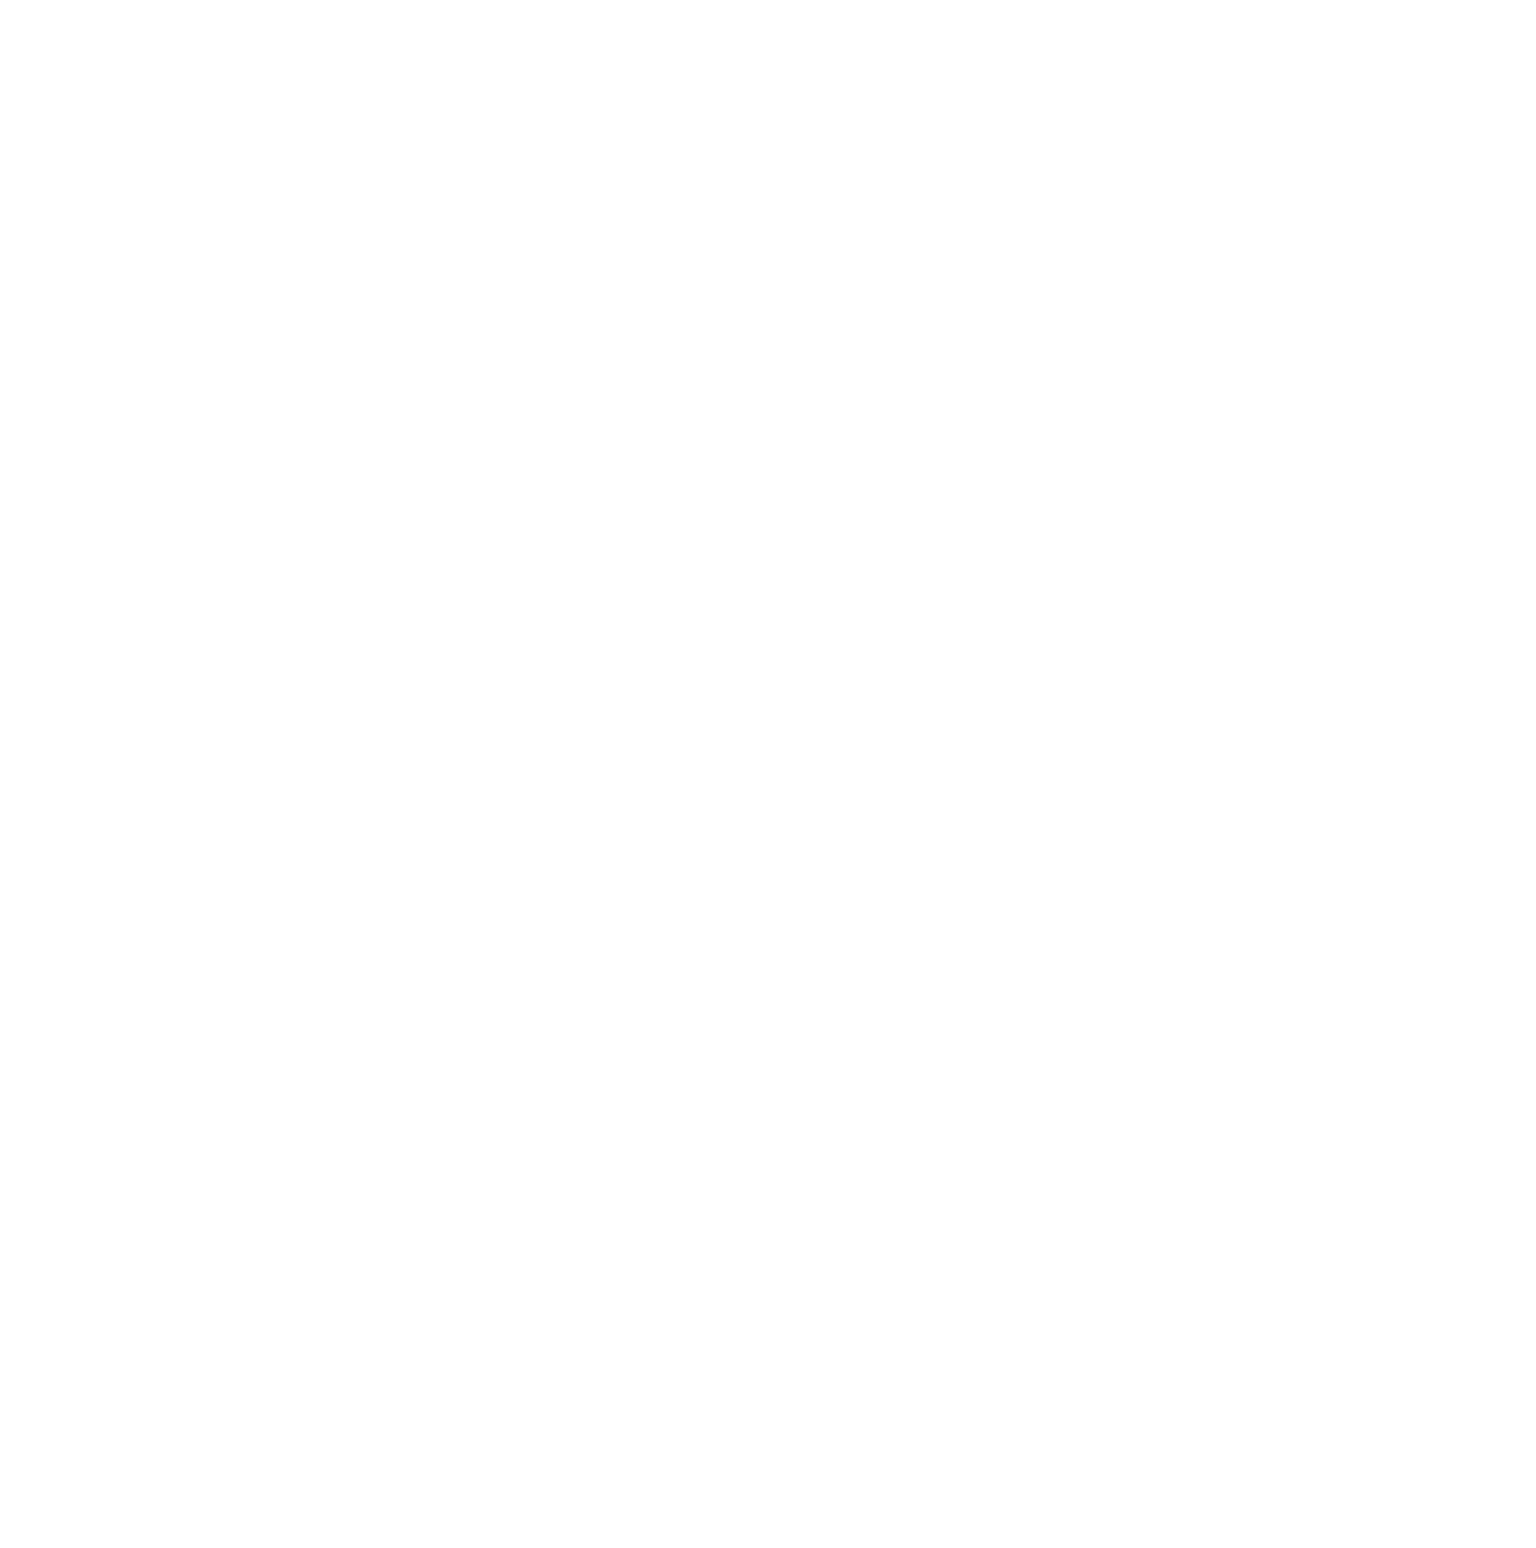 Alumina Limited logo for dark backgrounds (transparent PNG)